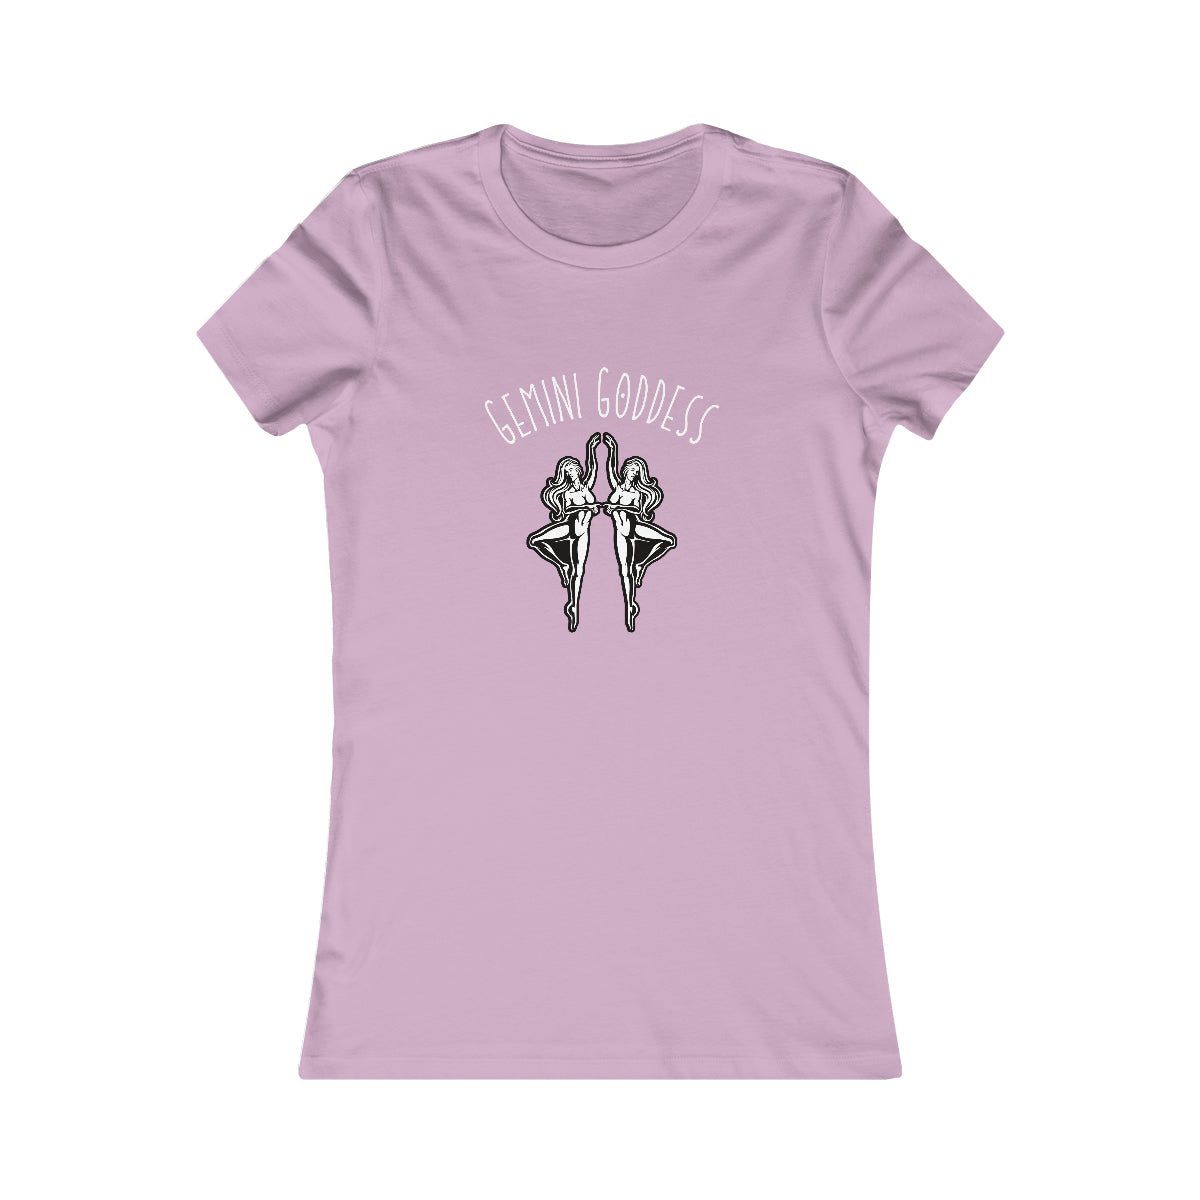 Gemini Zodiac Astrology T-Shirt Lilac Tee